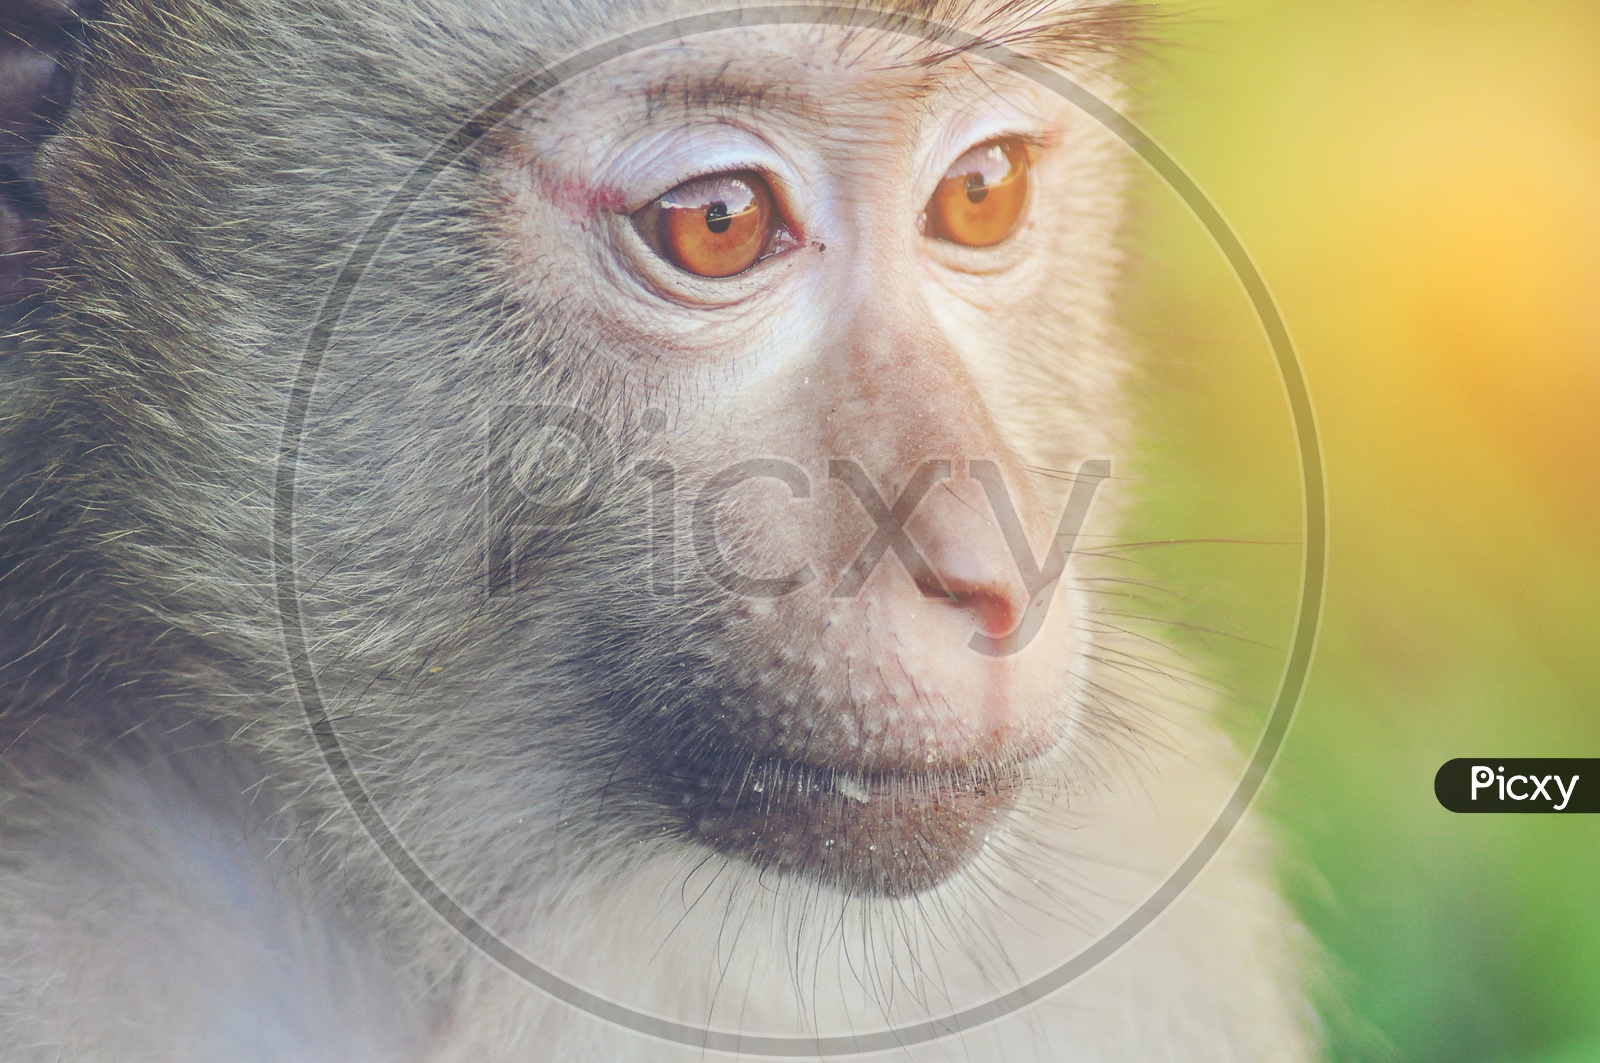 Face Closeup  wild monkey